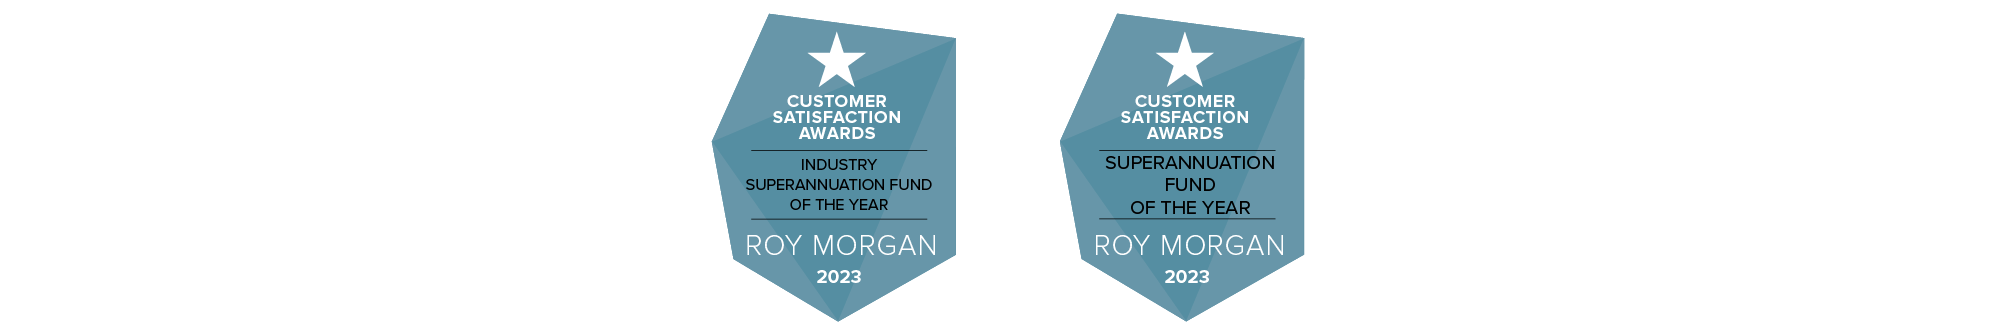 Roy Morgan customer service award 2023